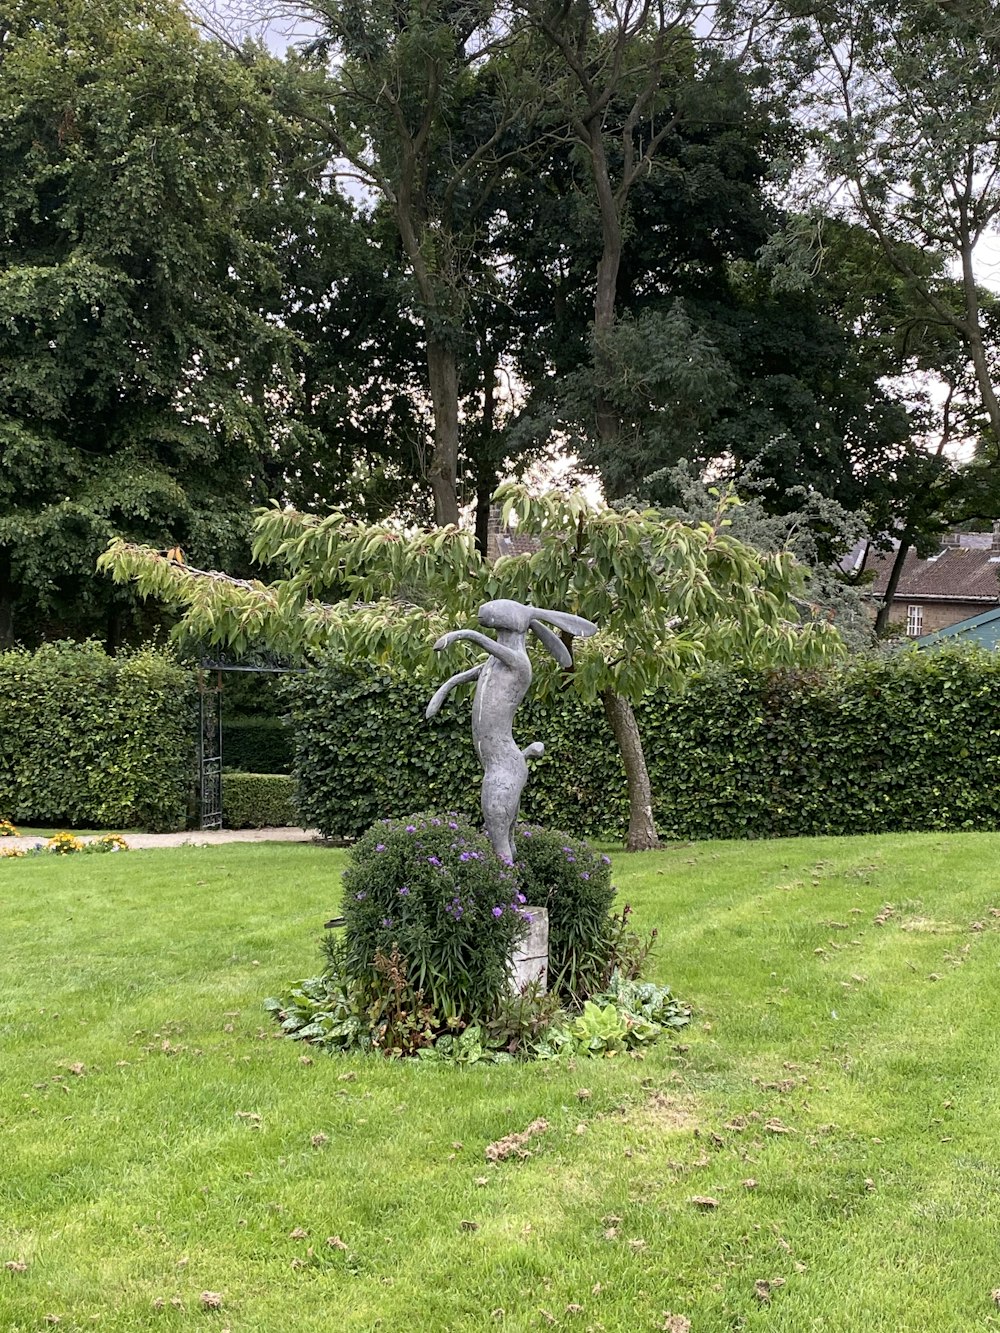 a statue of a cat in a garden